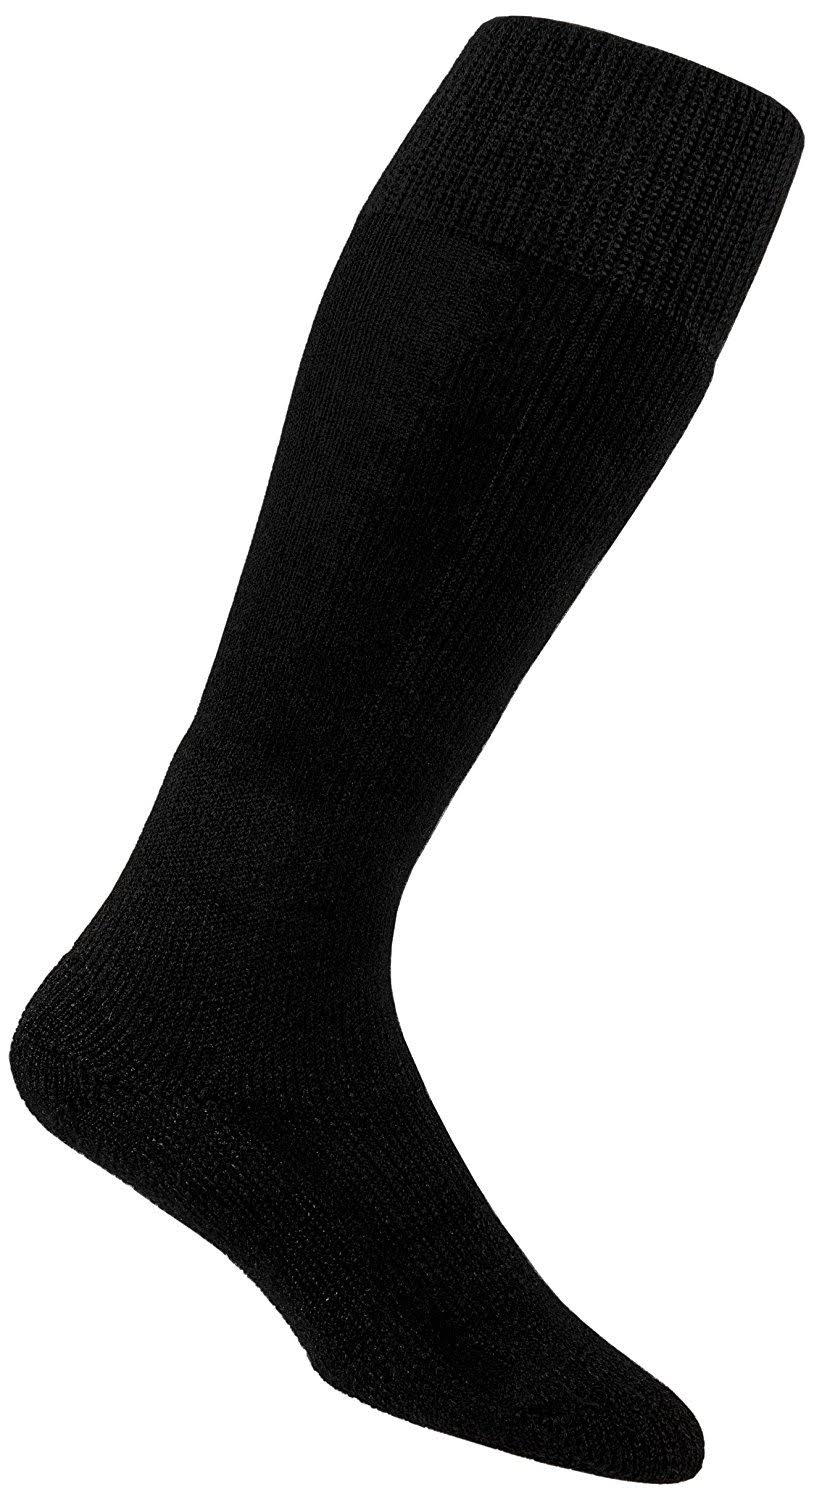 Thorlo Women's SL-9-454 Ski Sock - Black Diamond, Medium